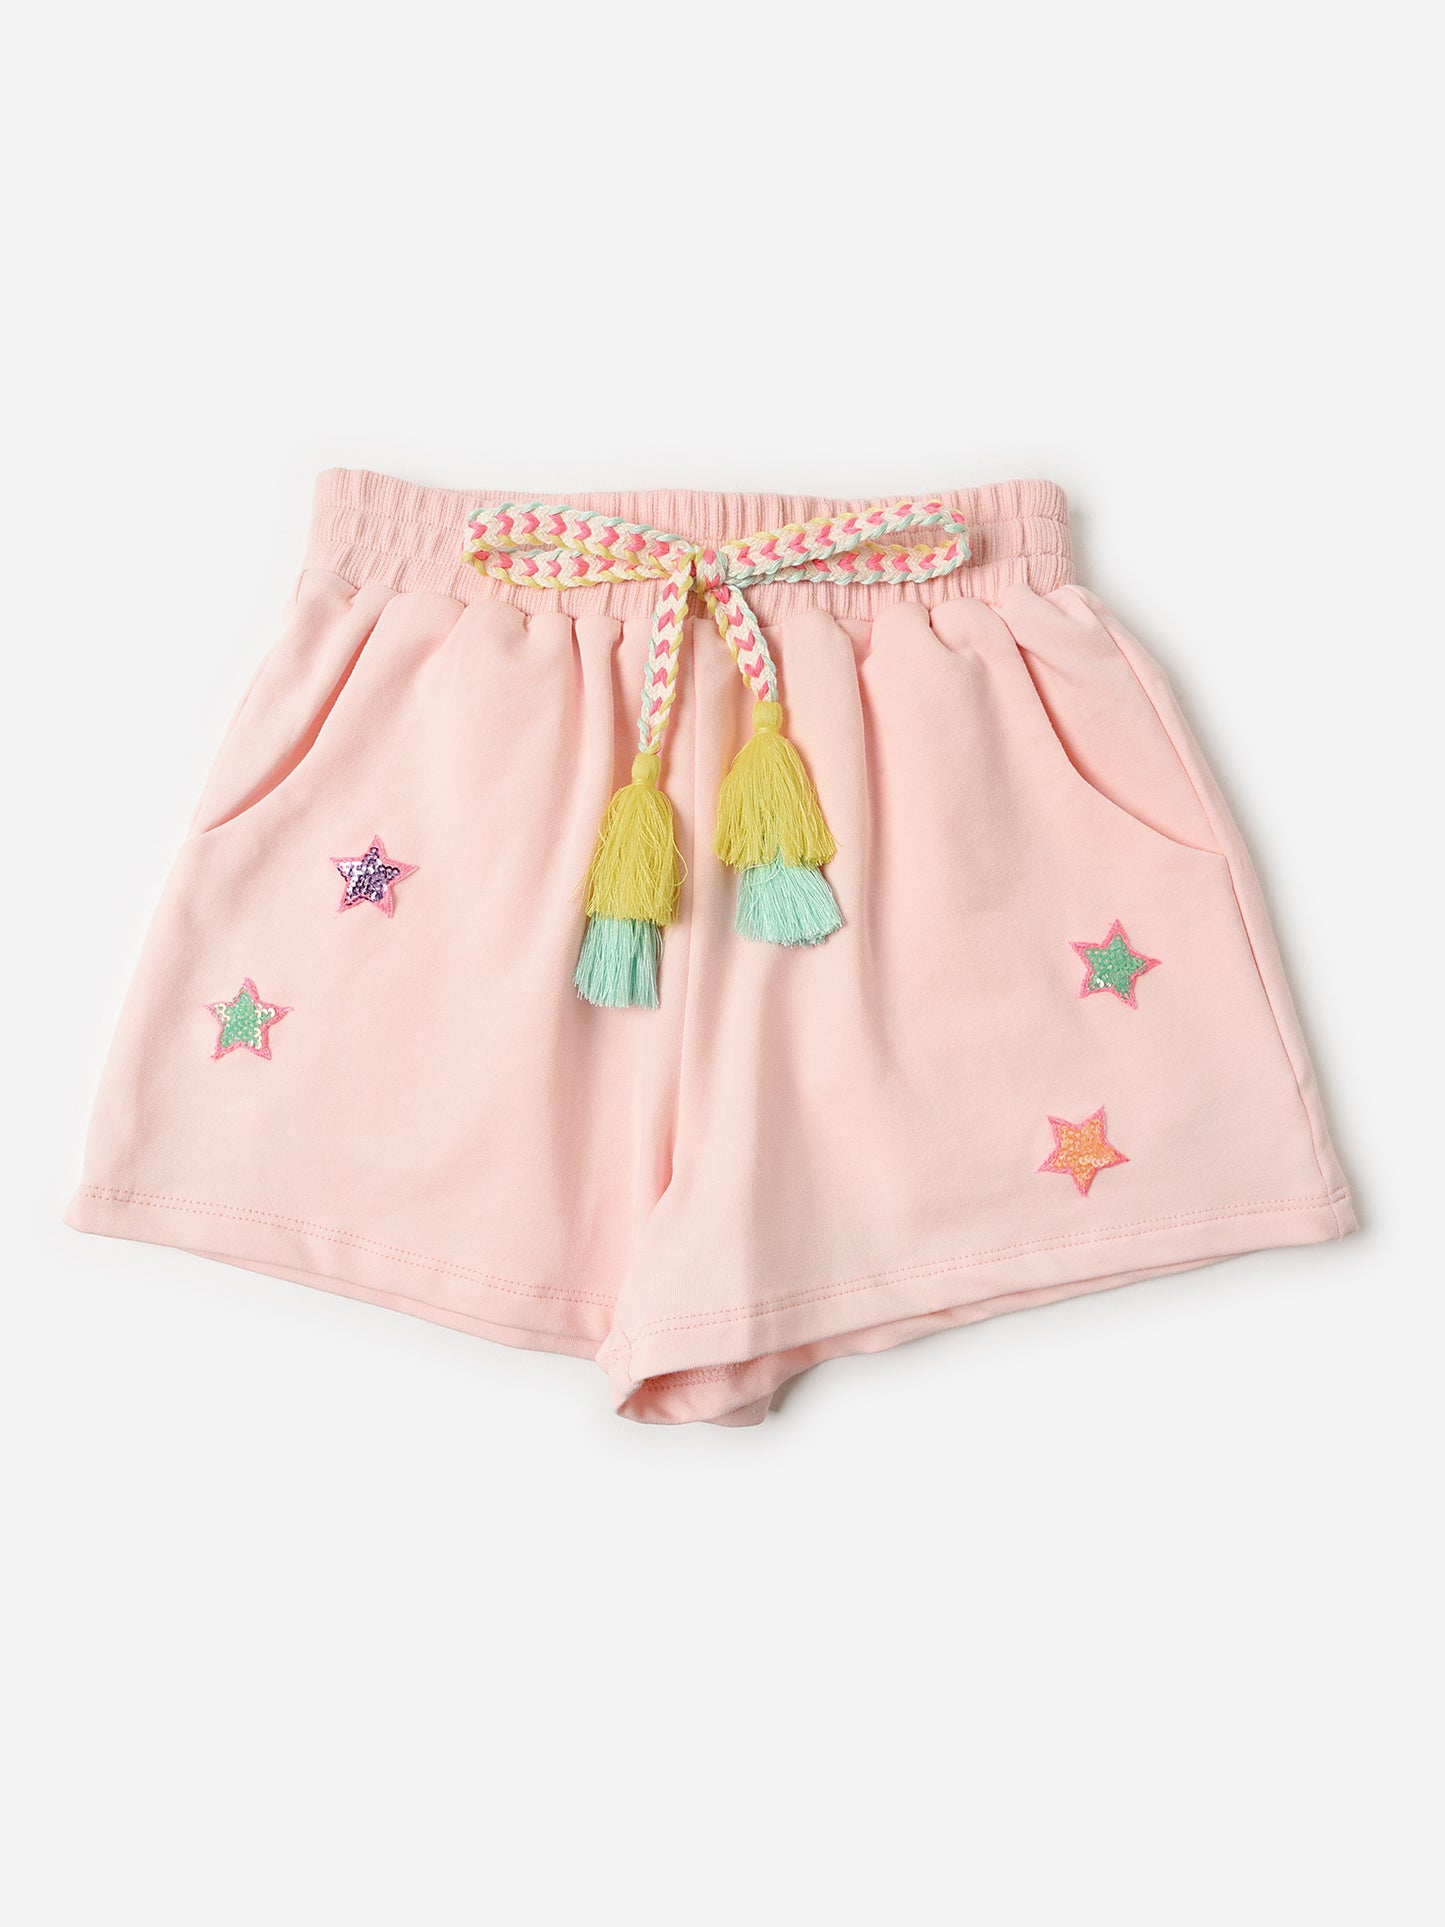 Hannah Banana Girls' Star Patches + Tassel Tie Short